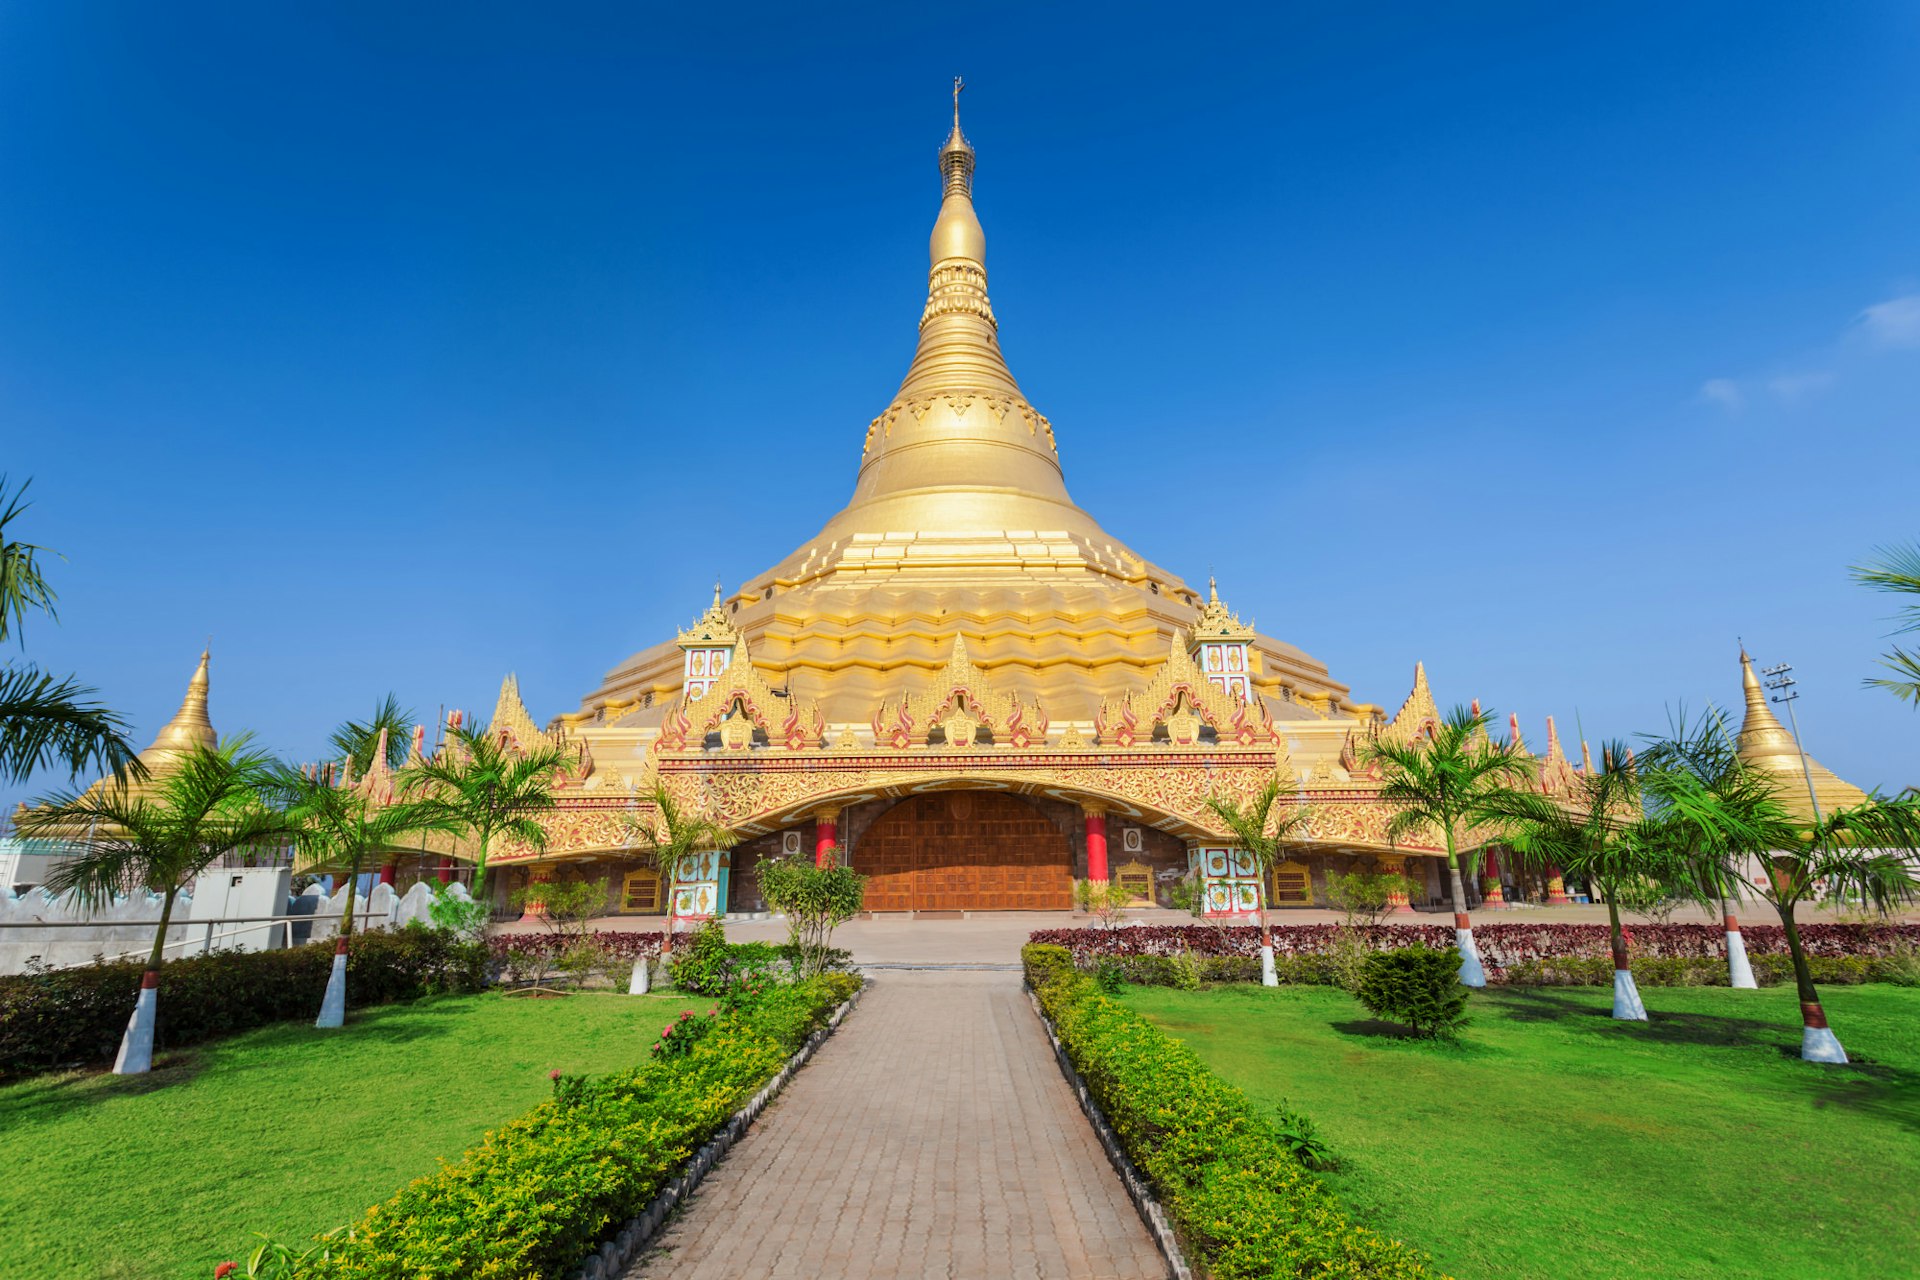 The golden stupa of the Global Vipassana Pagoda © saiko3p / Getty Images